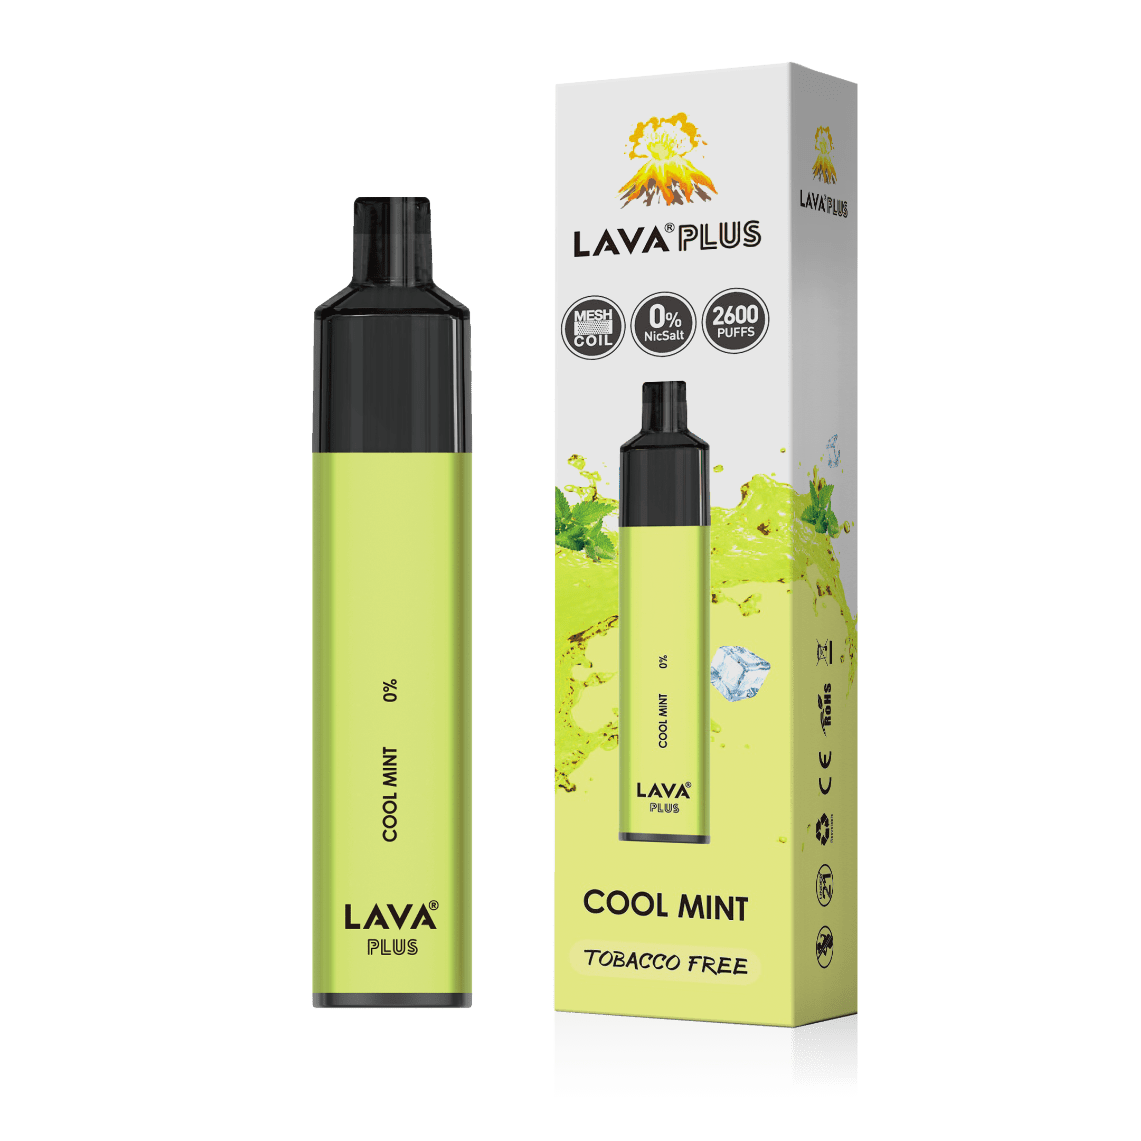 Lava Plus 2600 Puffs Disposable Zero Nicotine Free 0% - Cool Mint